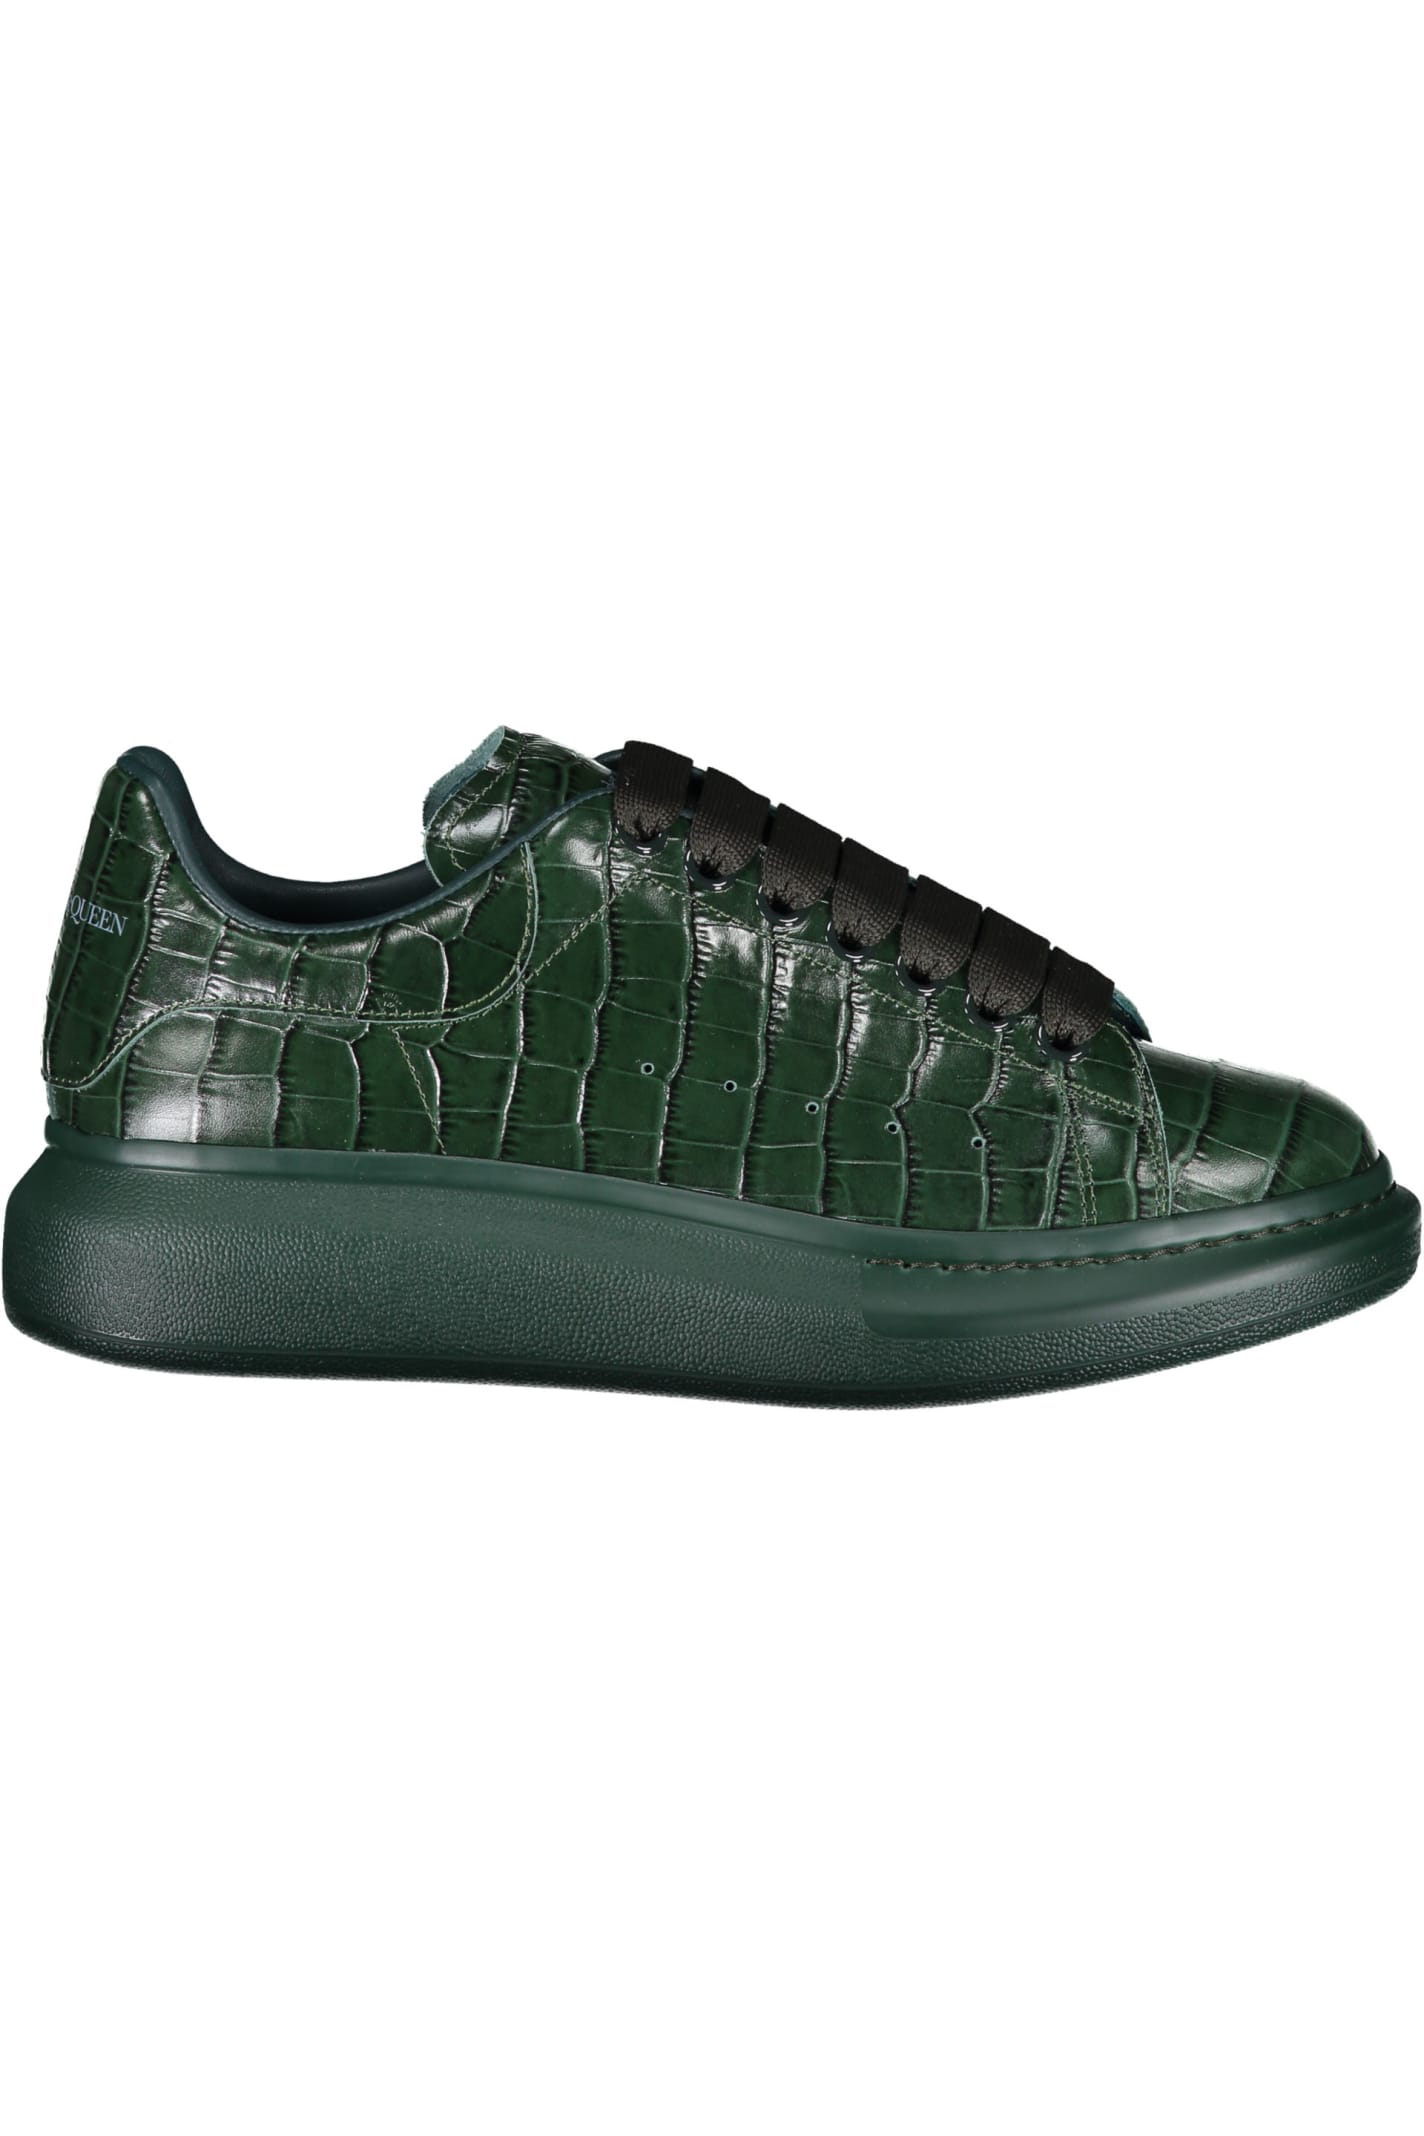 LOUIS VUITTON Calfskin Crocodile Embossed Frontrow Sneakers 39